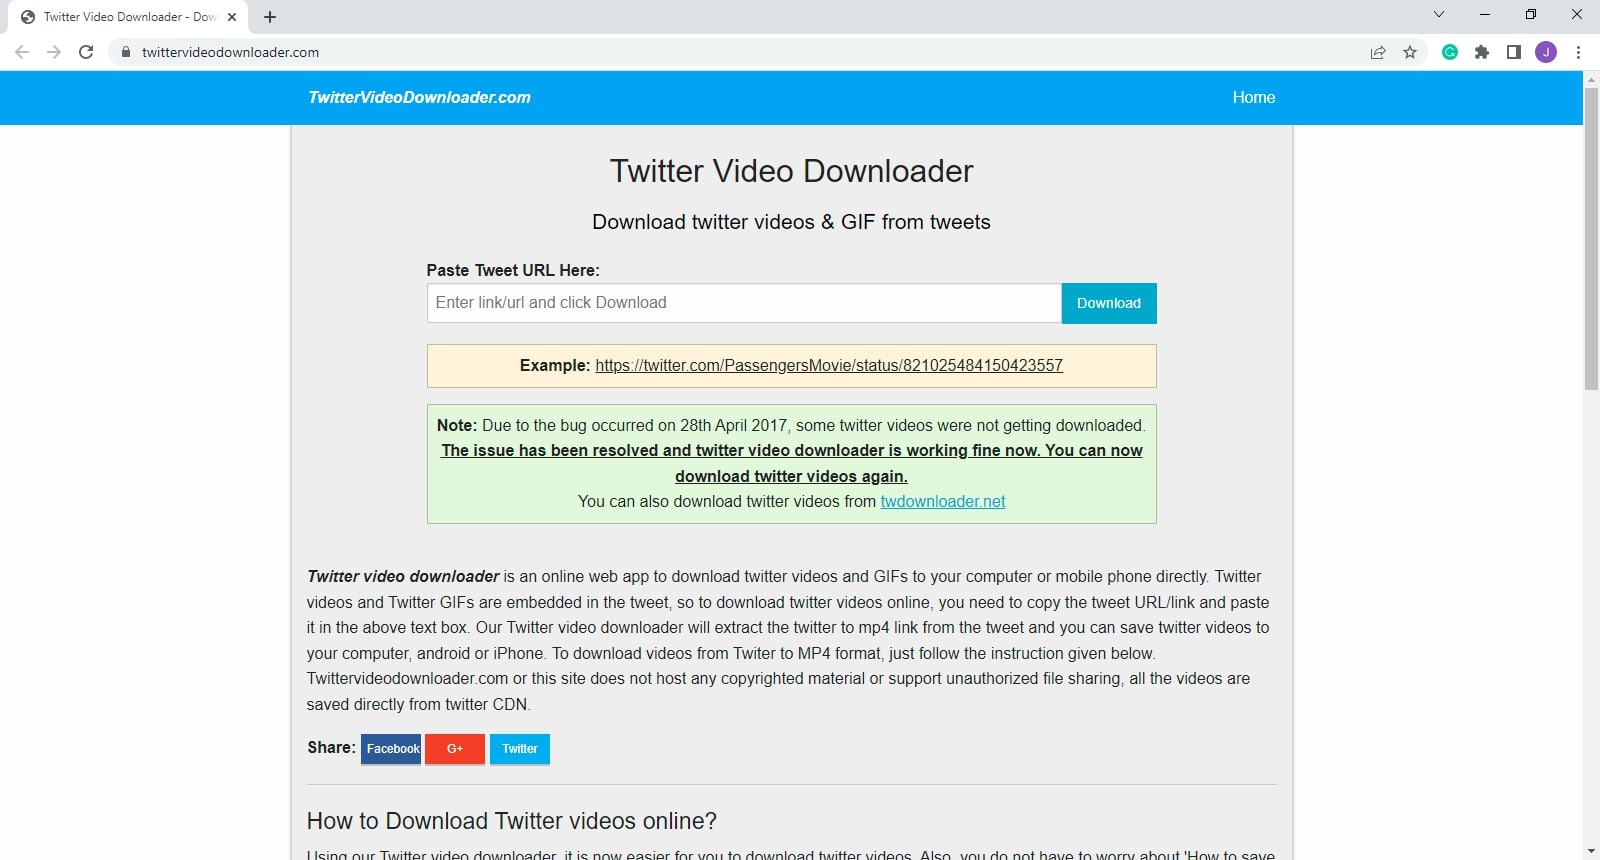 Open Twitter Video Downloader